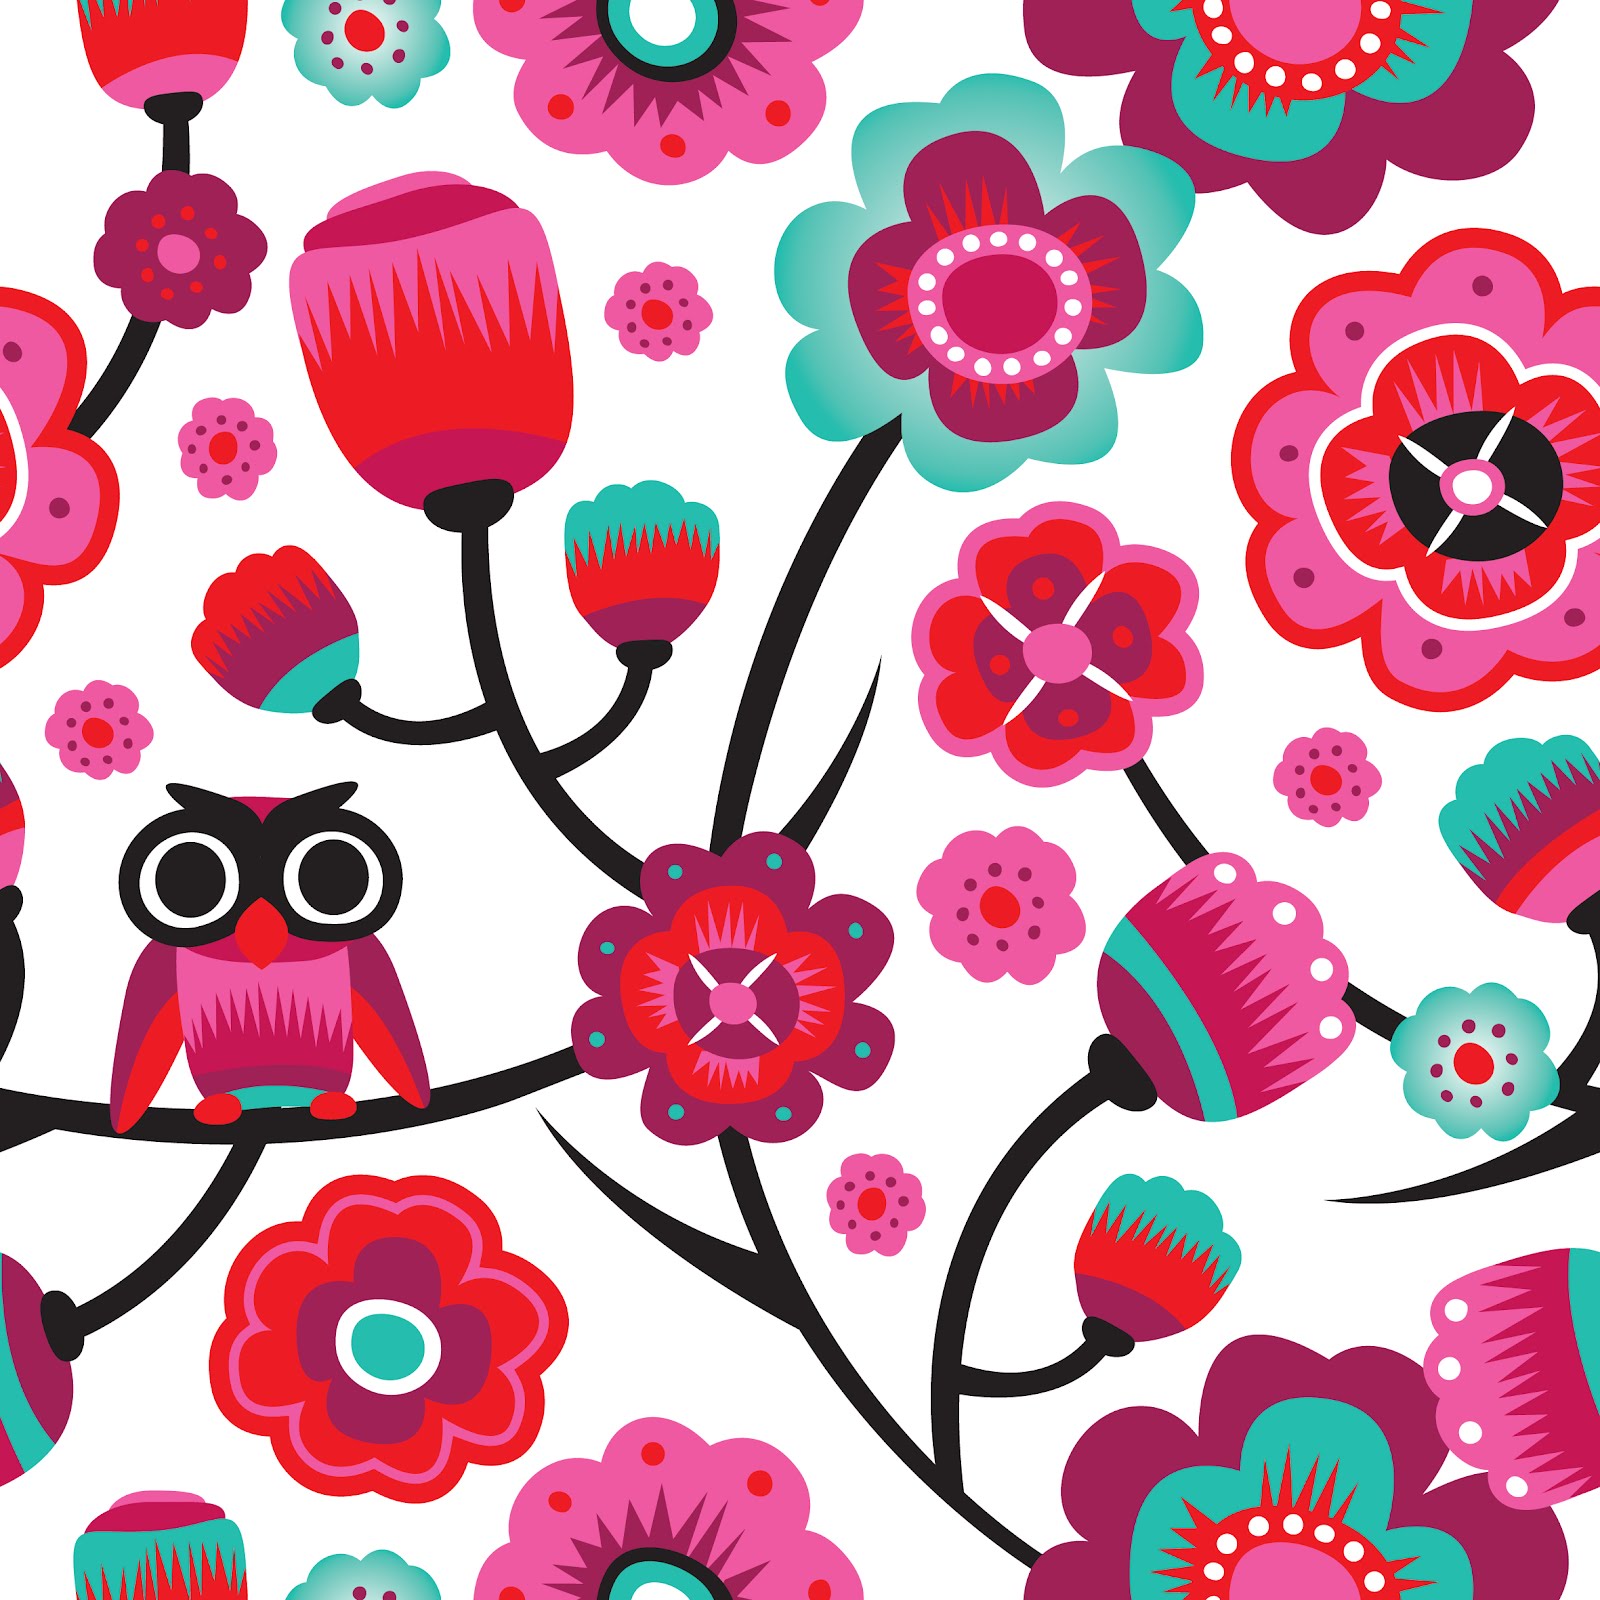 Cute Owl Design Wallpaper Cute new owl pattern design